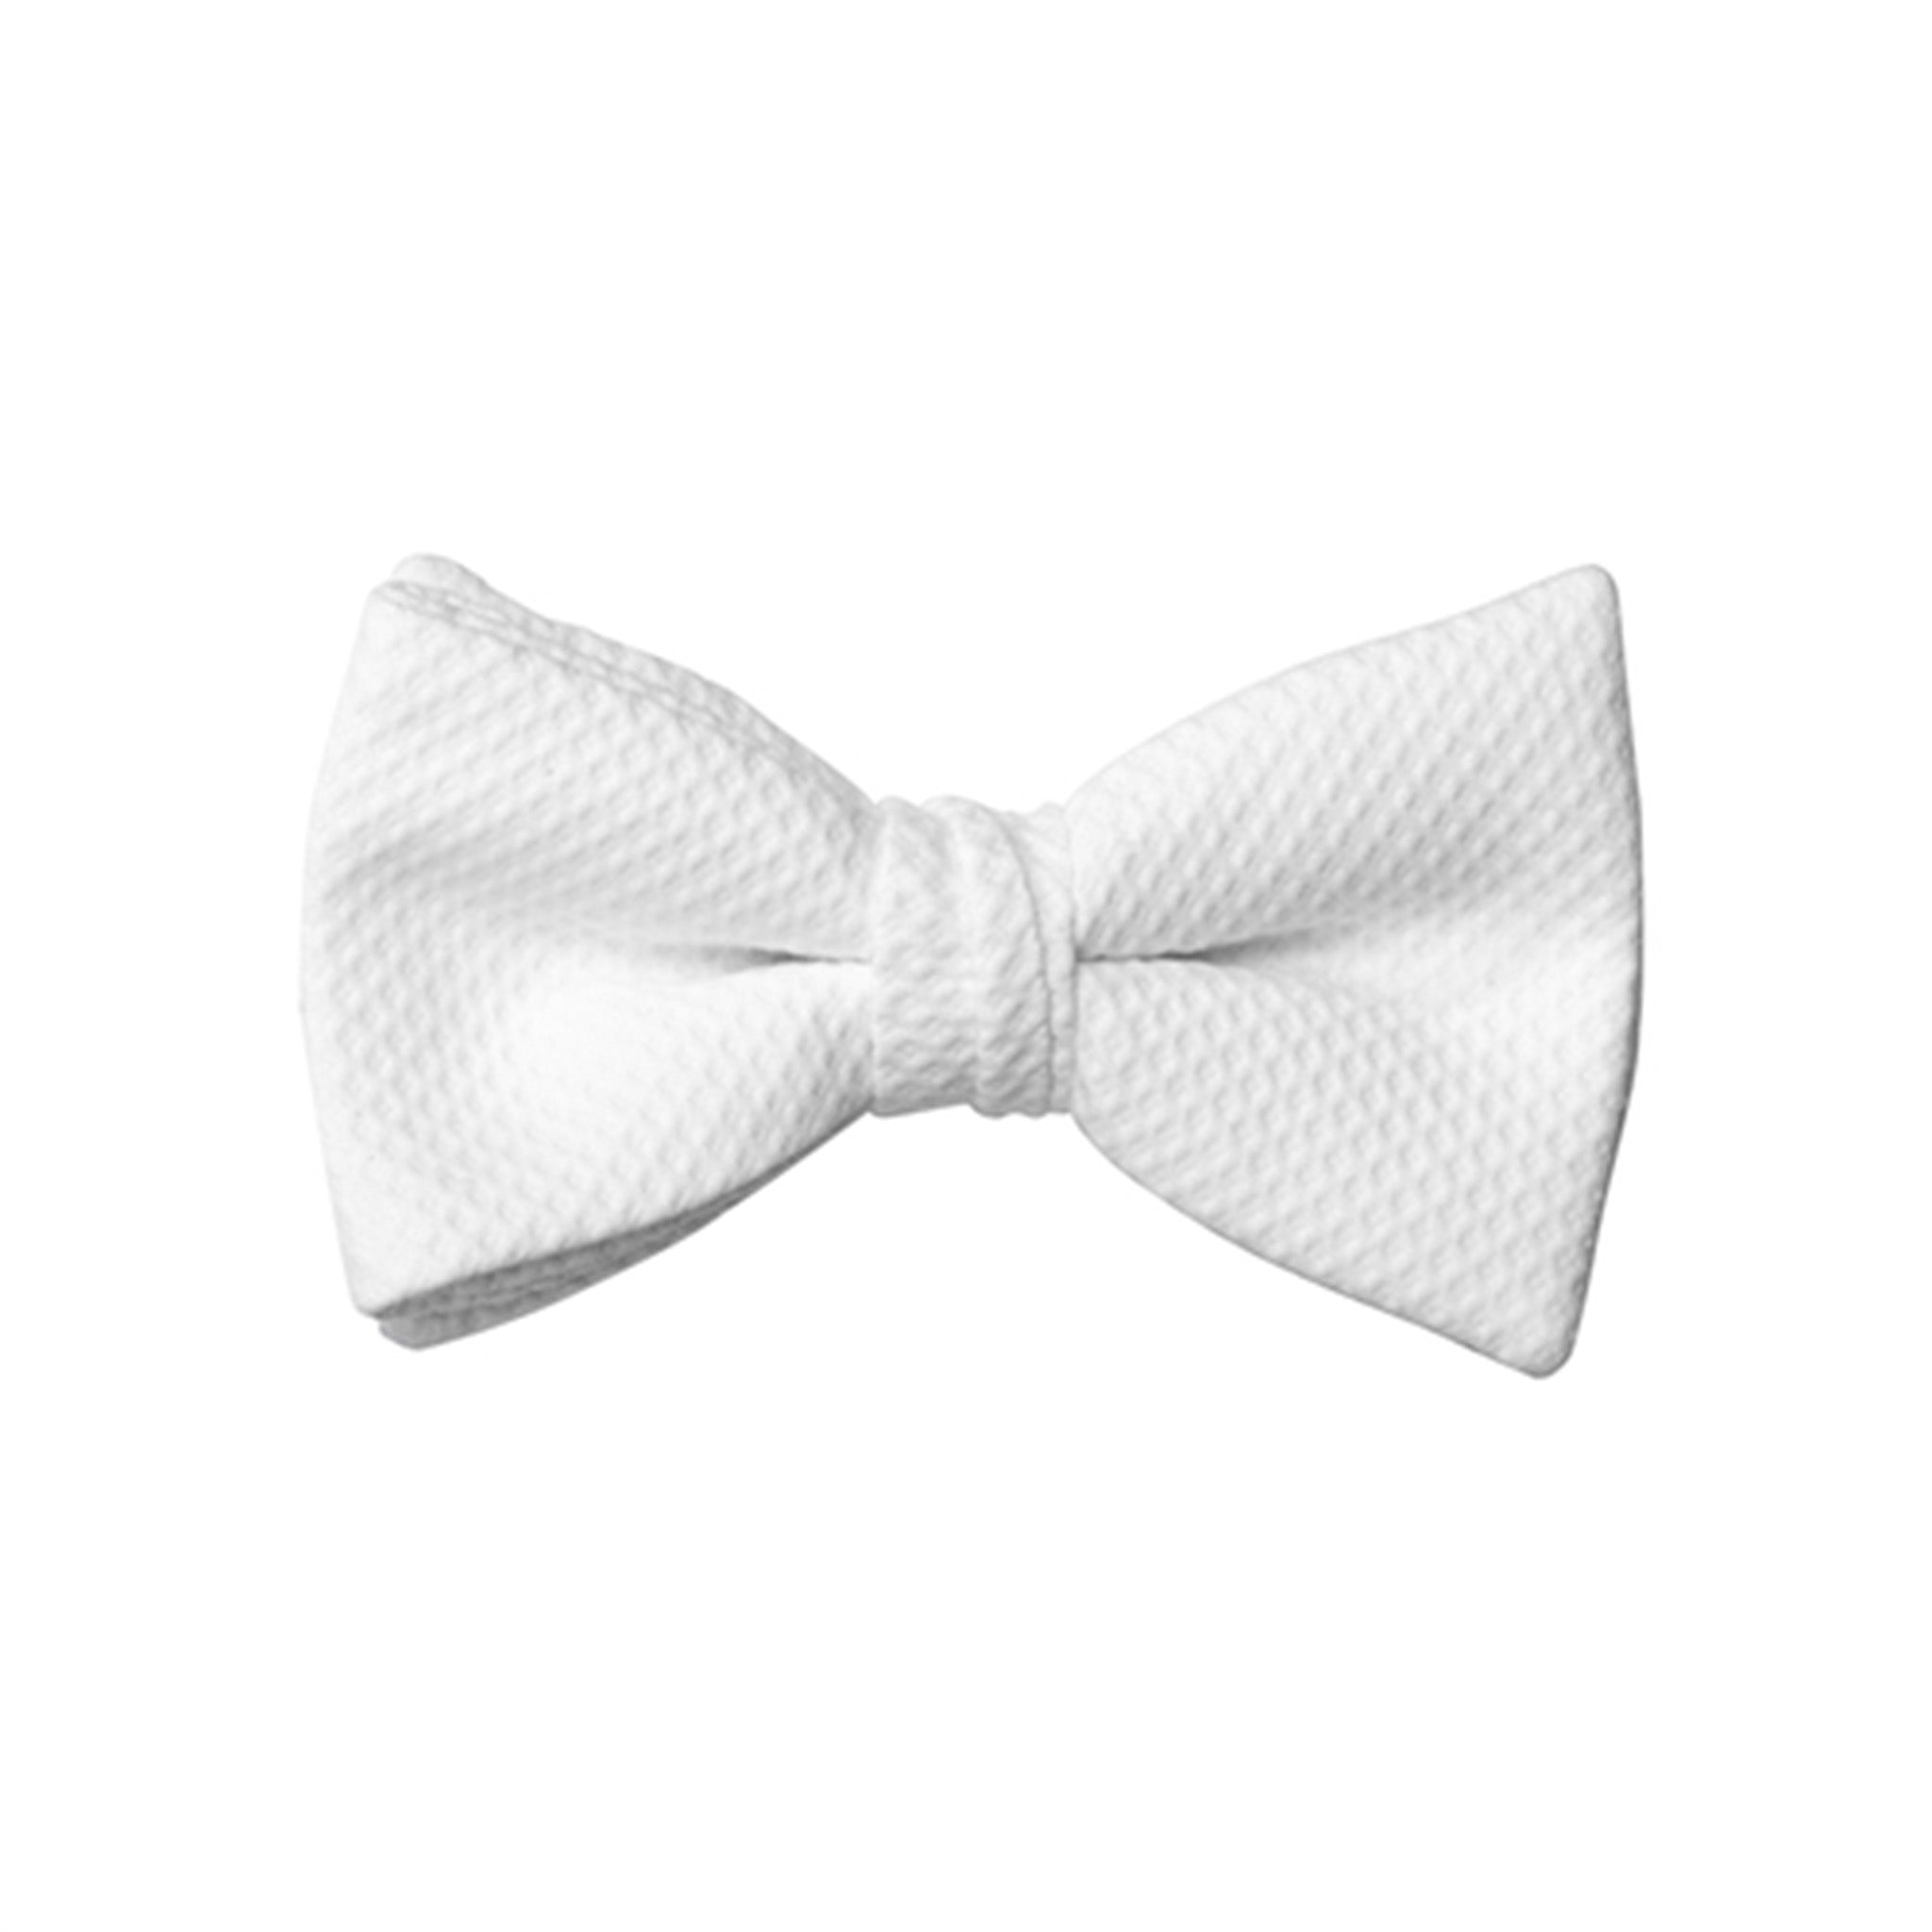 White Pique Bow Tie (pre-tied)